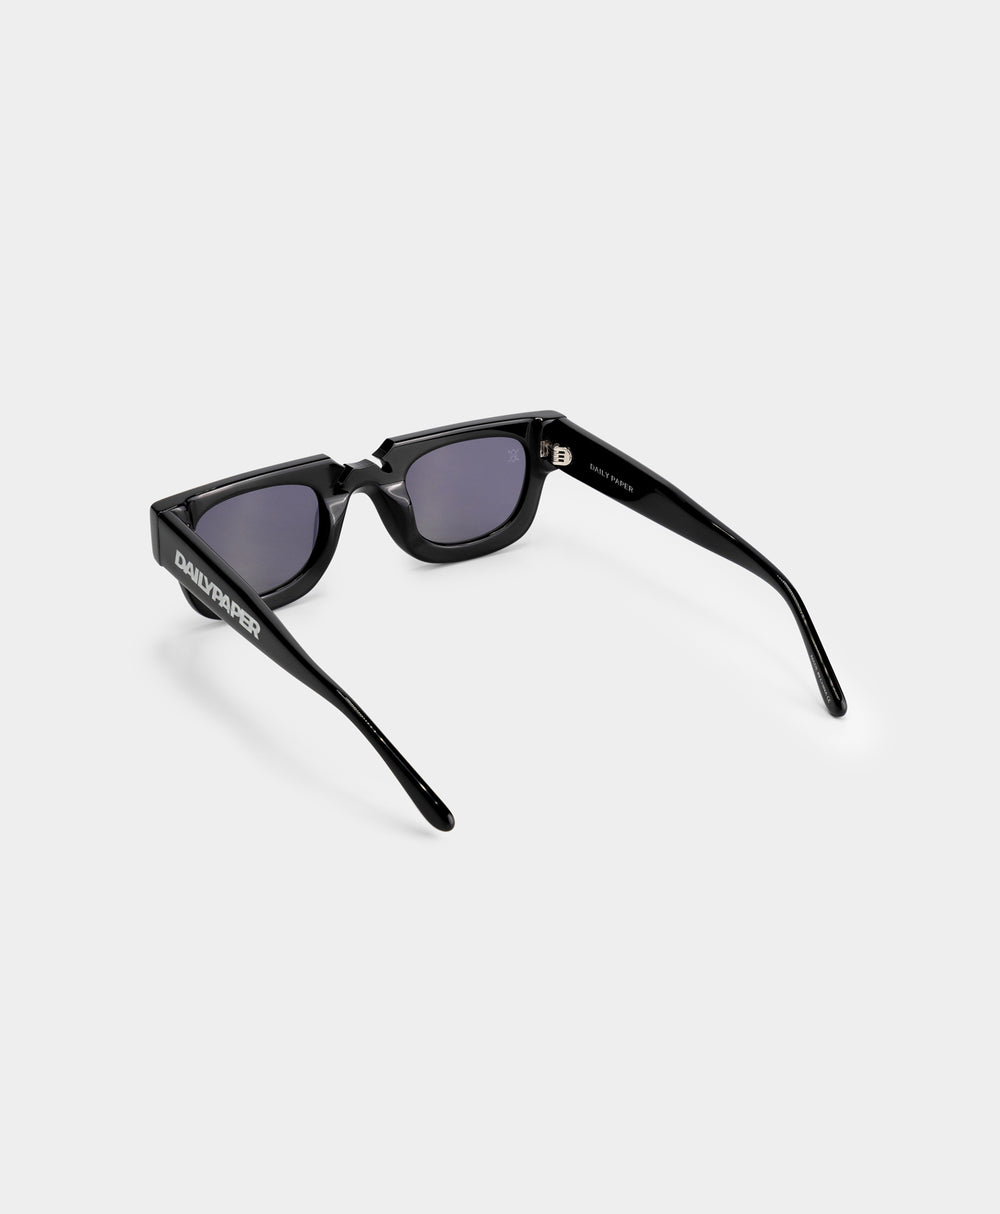 DP - Black Patti Sunglasses - Packshot - Rear